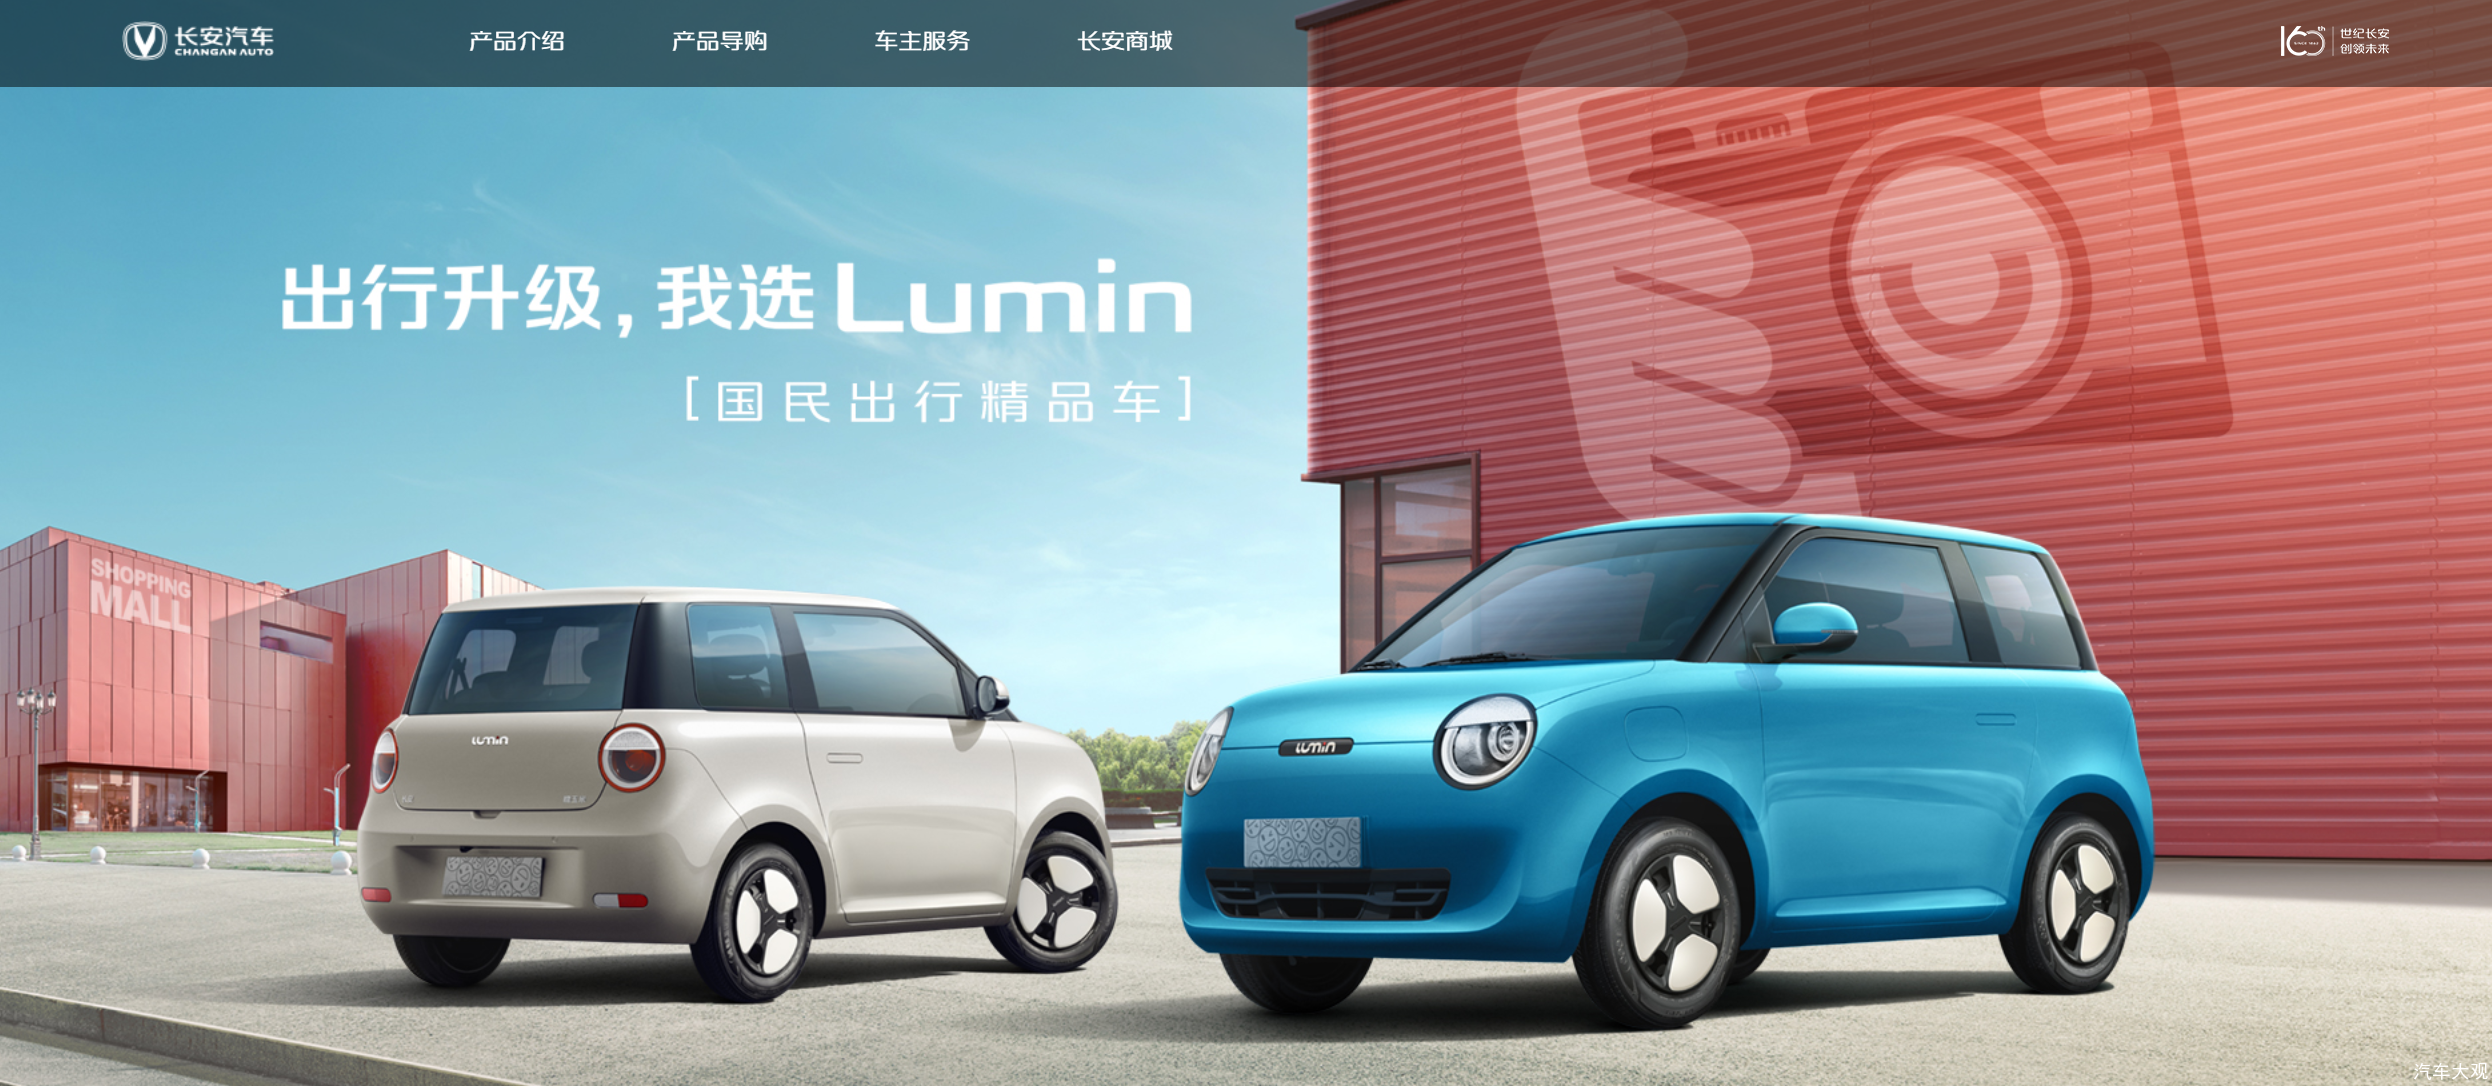 <b>长安Lumin官方平台正式上线,新车将于6月上市发布</b>